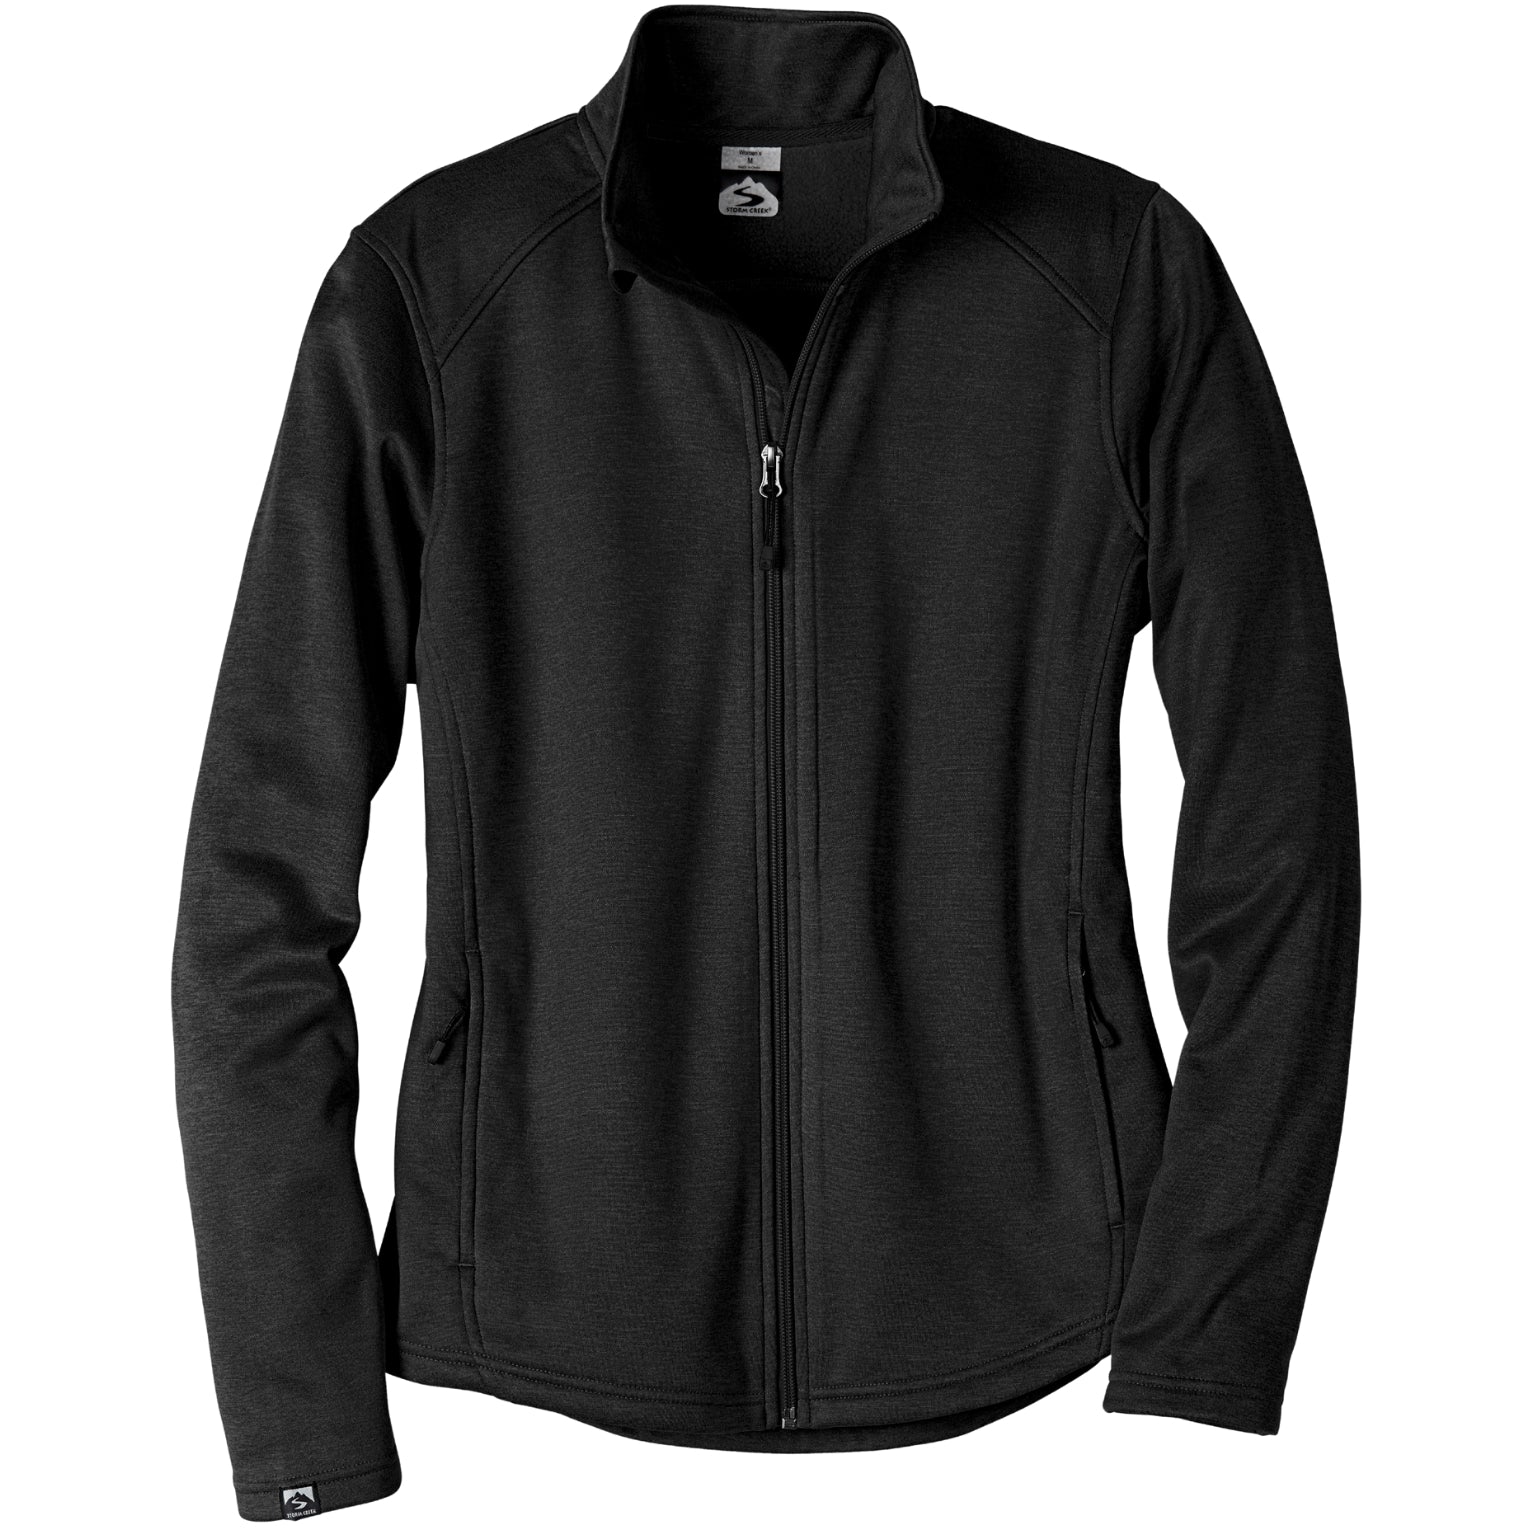 Customizable Storm Creek women's Stabilizer performance fleece jacket in black.